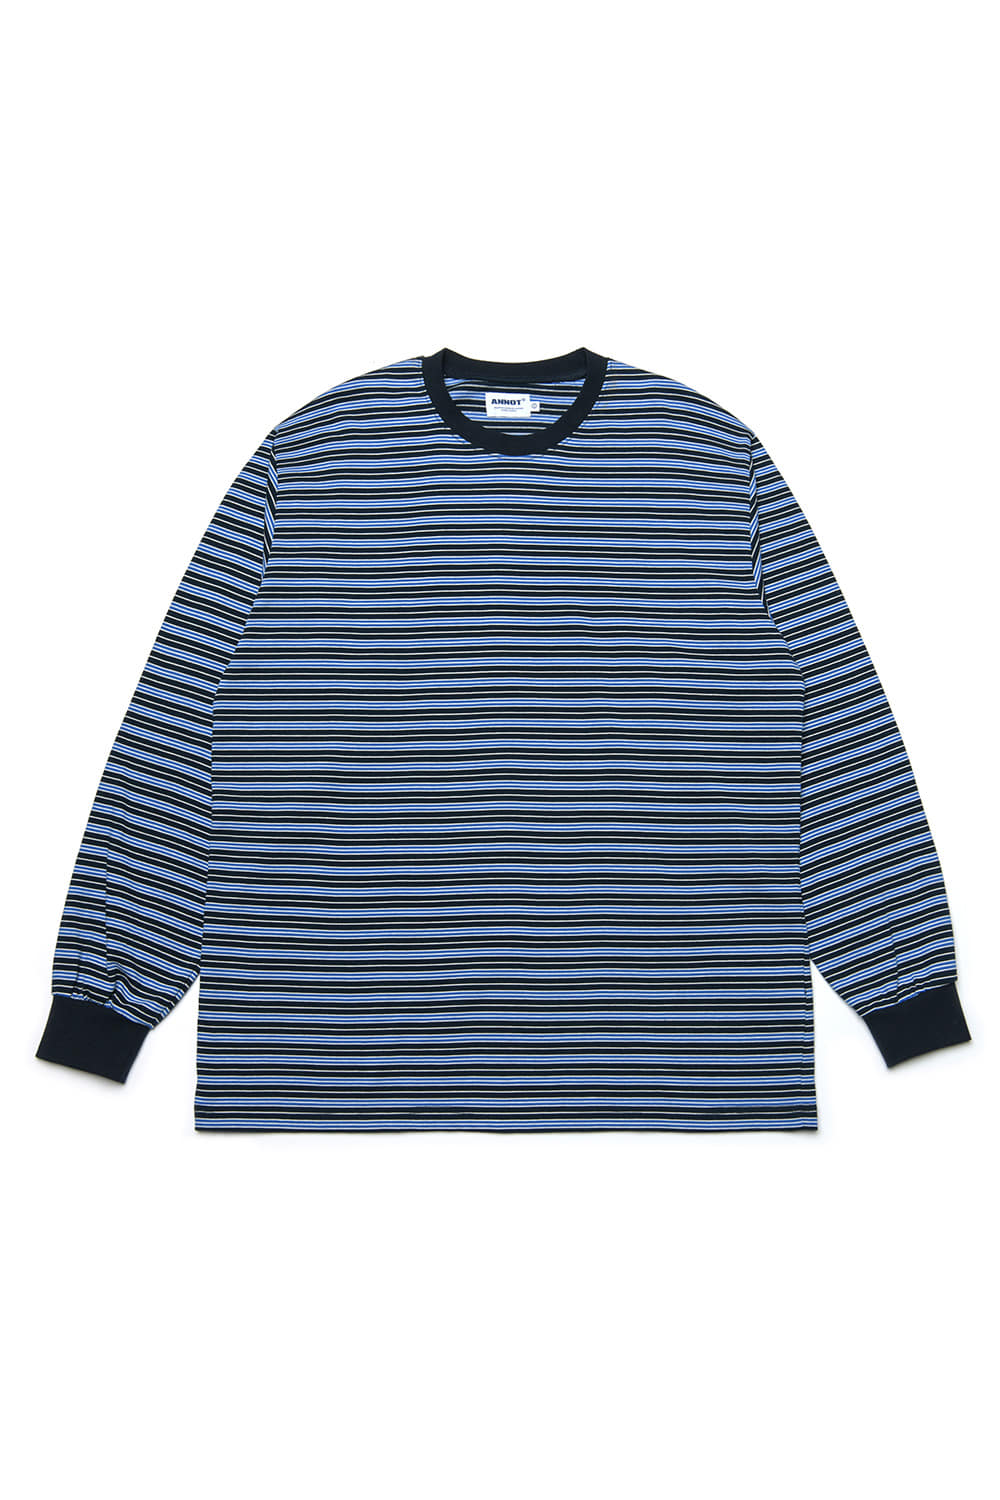 Multi Stripe Long Sleeve Navy Blue